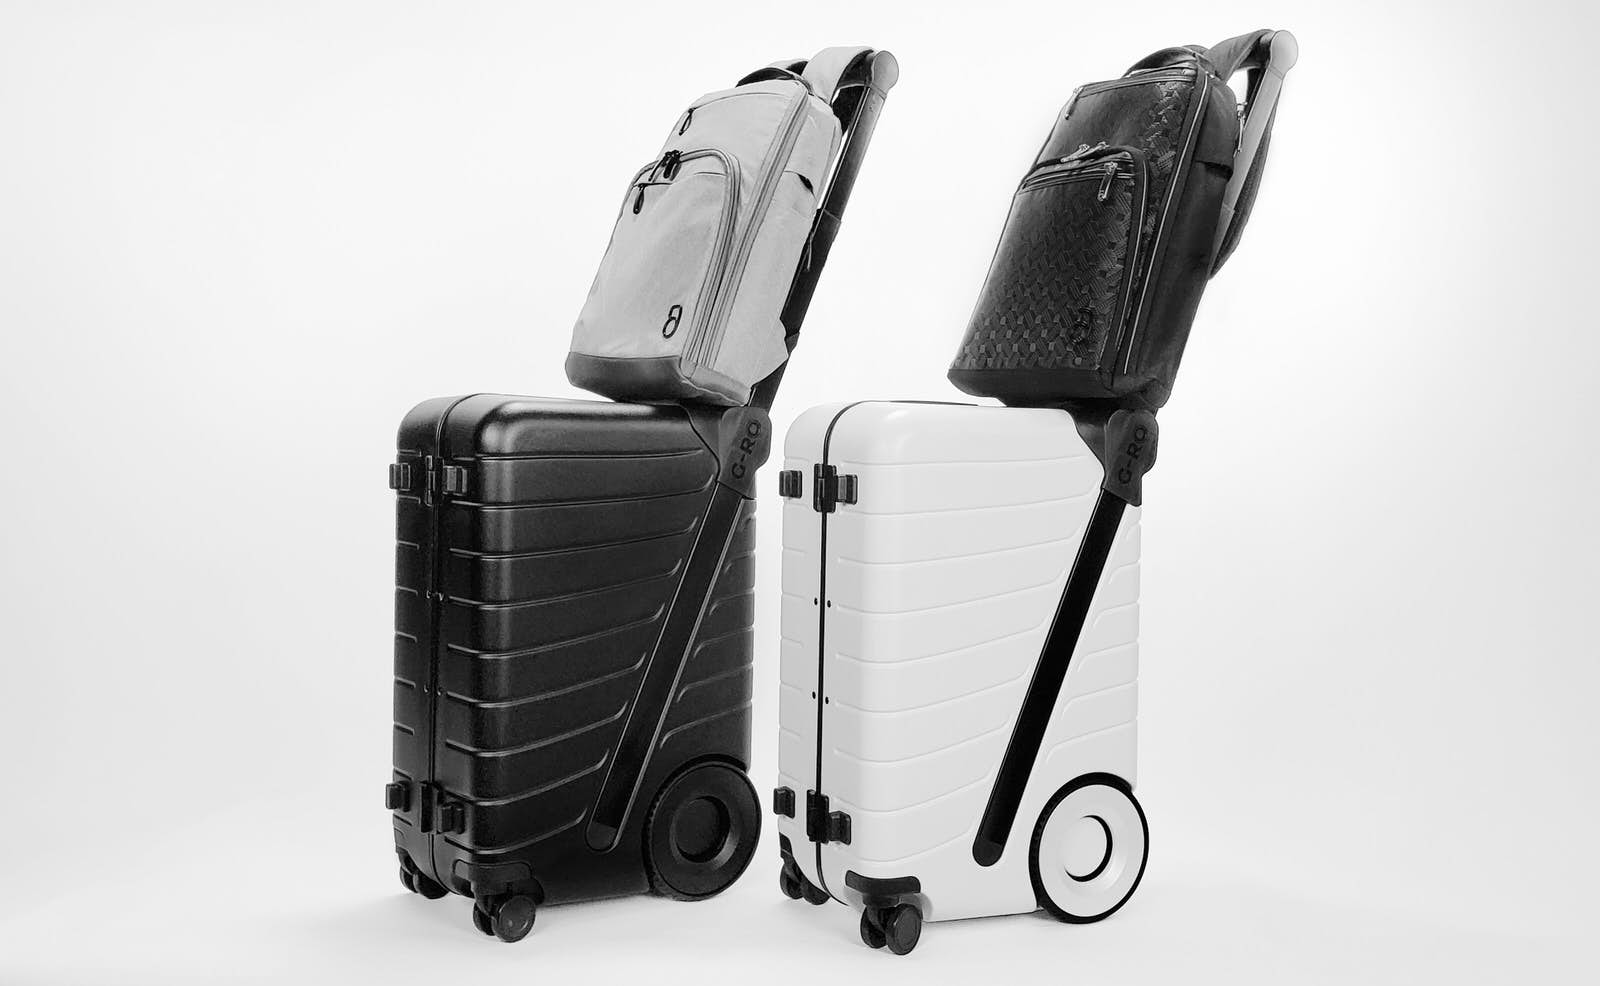 travel one luggage brand